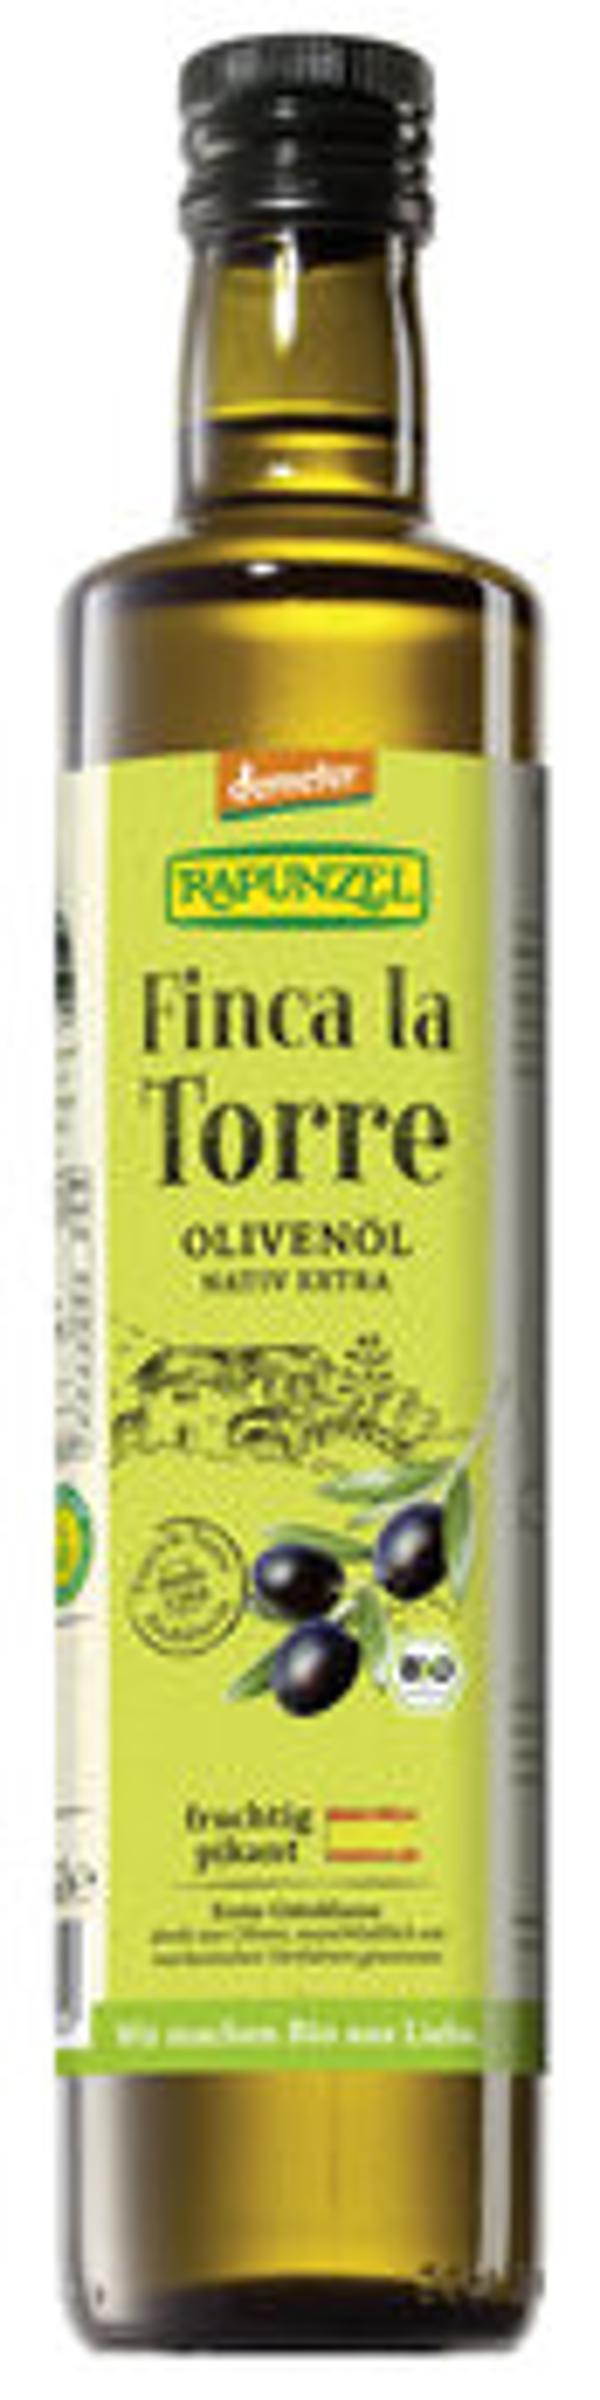 Produktfoto zu Olivenöl Finca la Torre nativ extra, 0,5 l